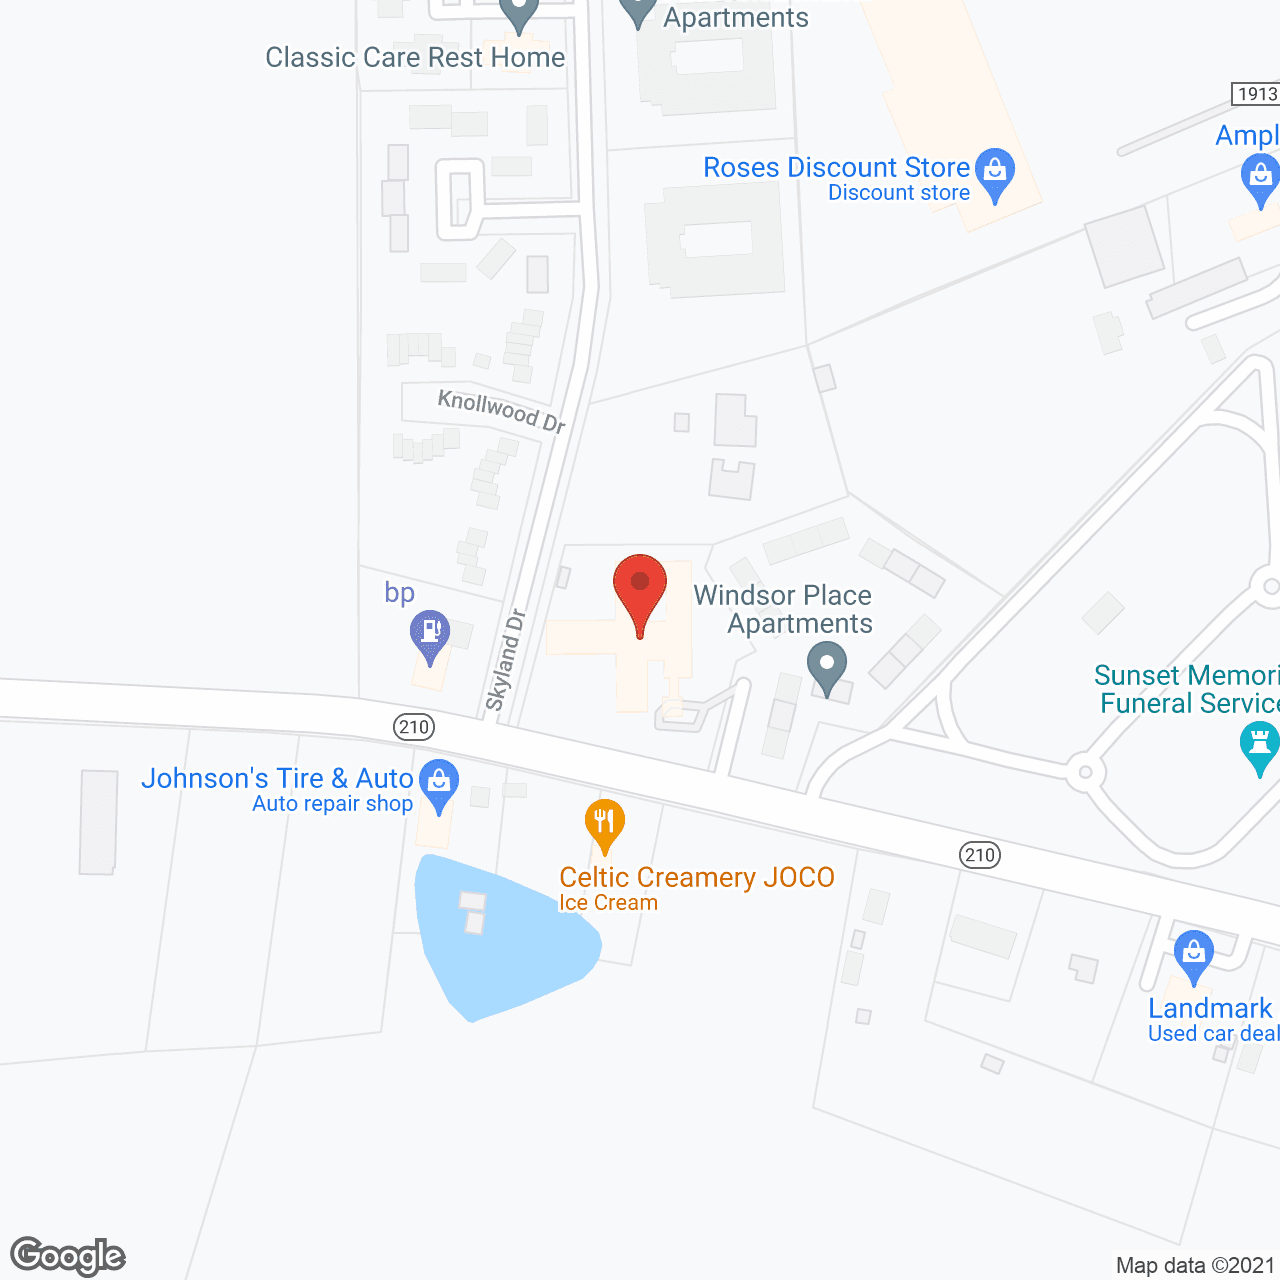 Meadowview in google map